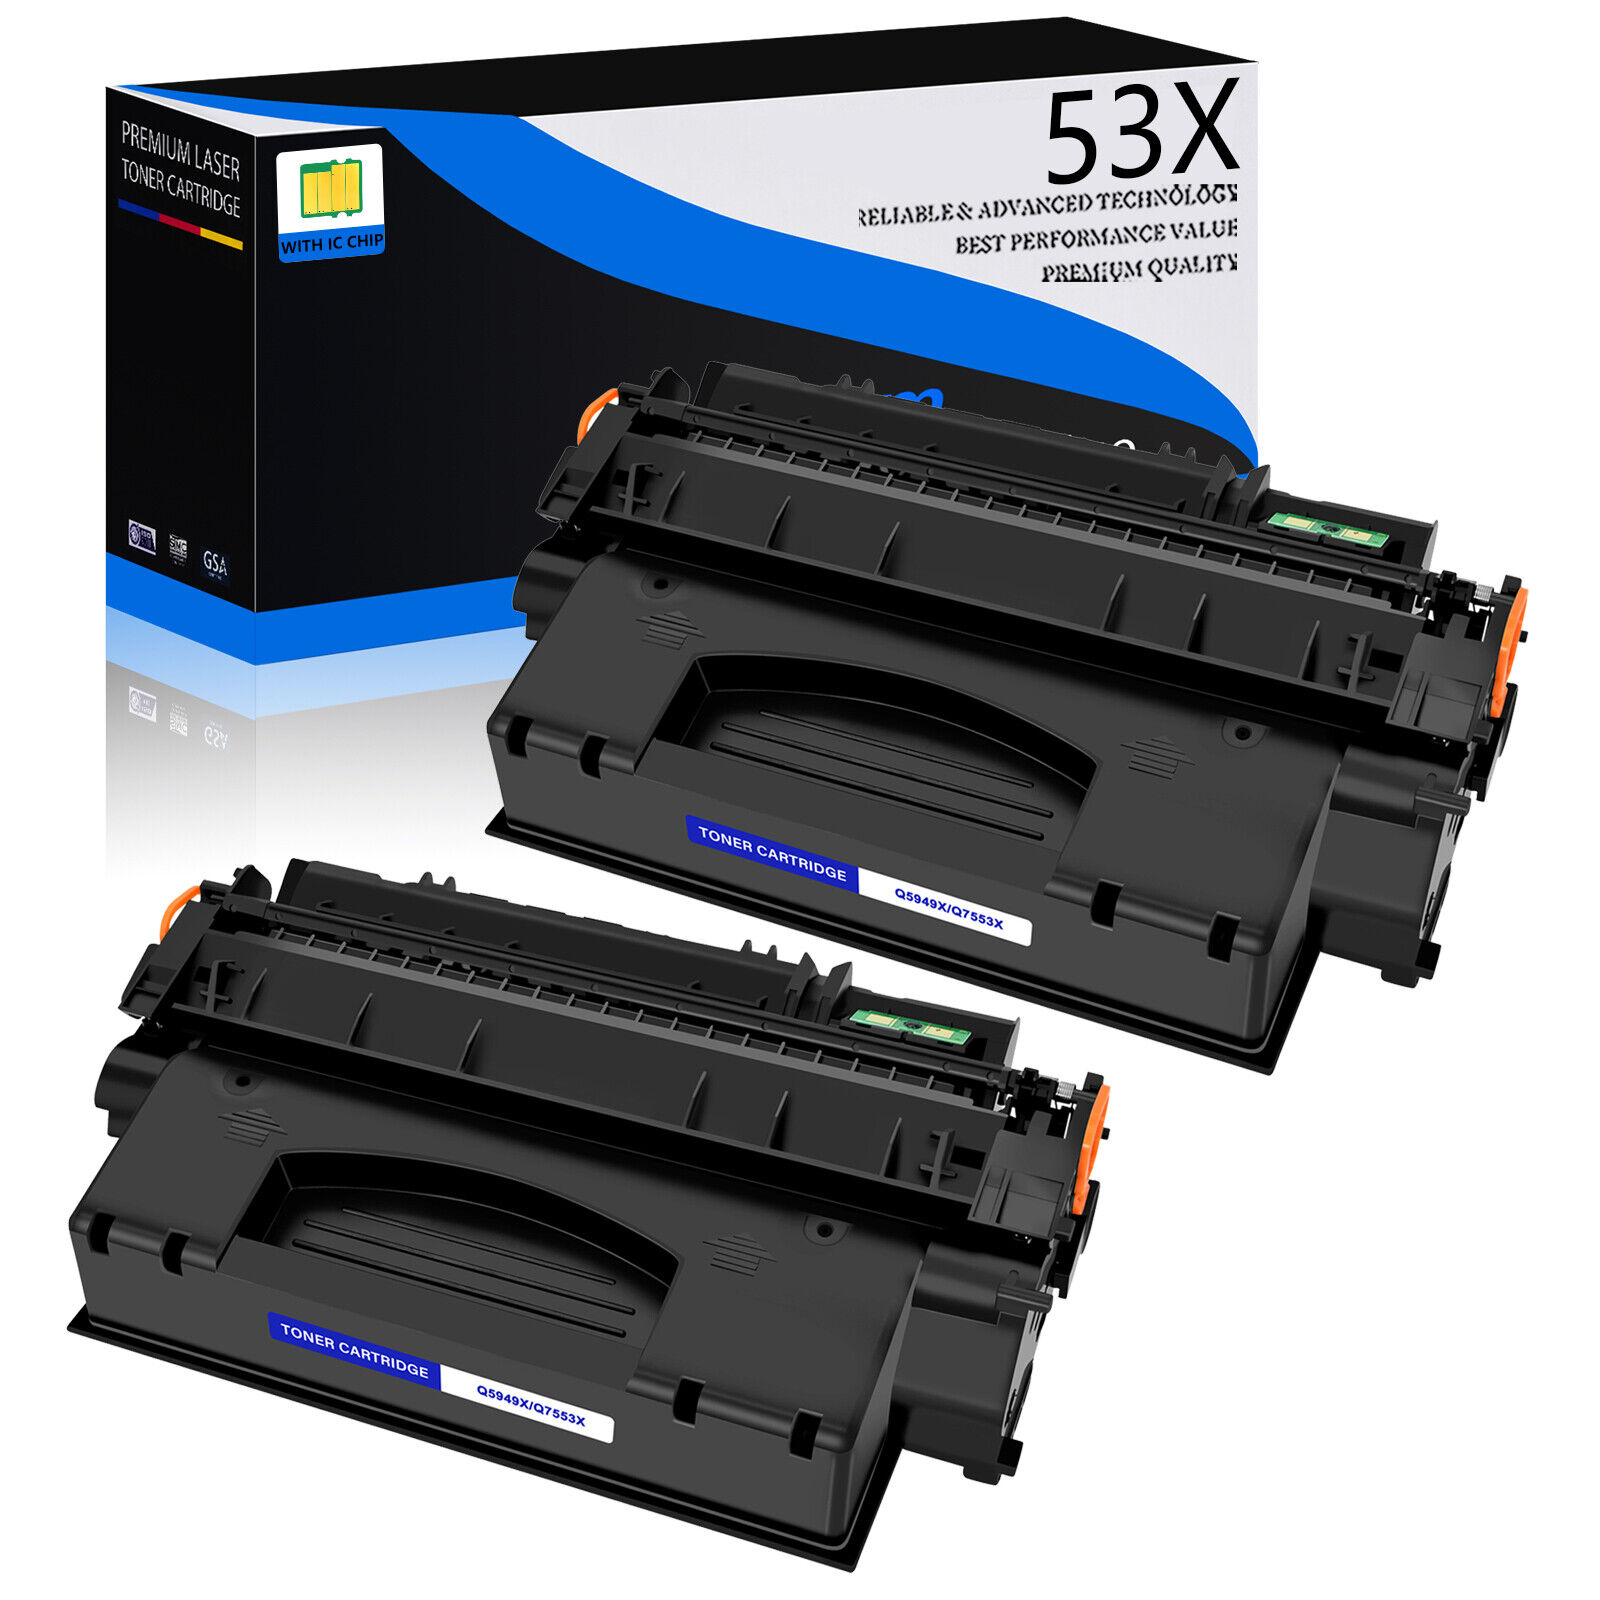 US Stock 2PK Q7553X 53X Toner for HP LaserJet P2015 P2015d P2015dn P2015x